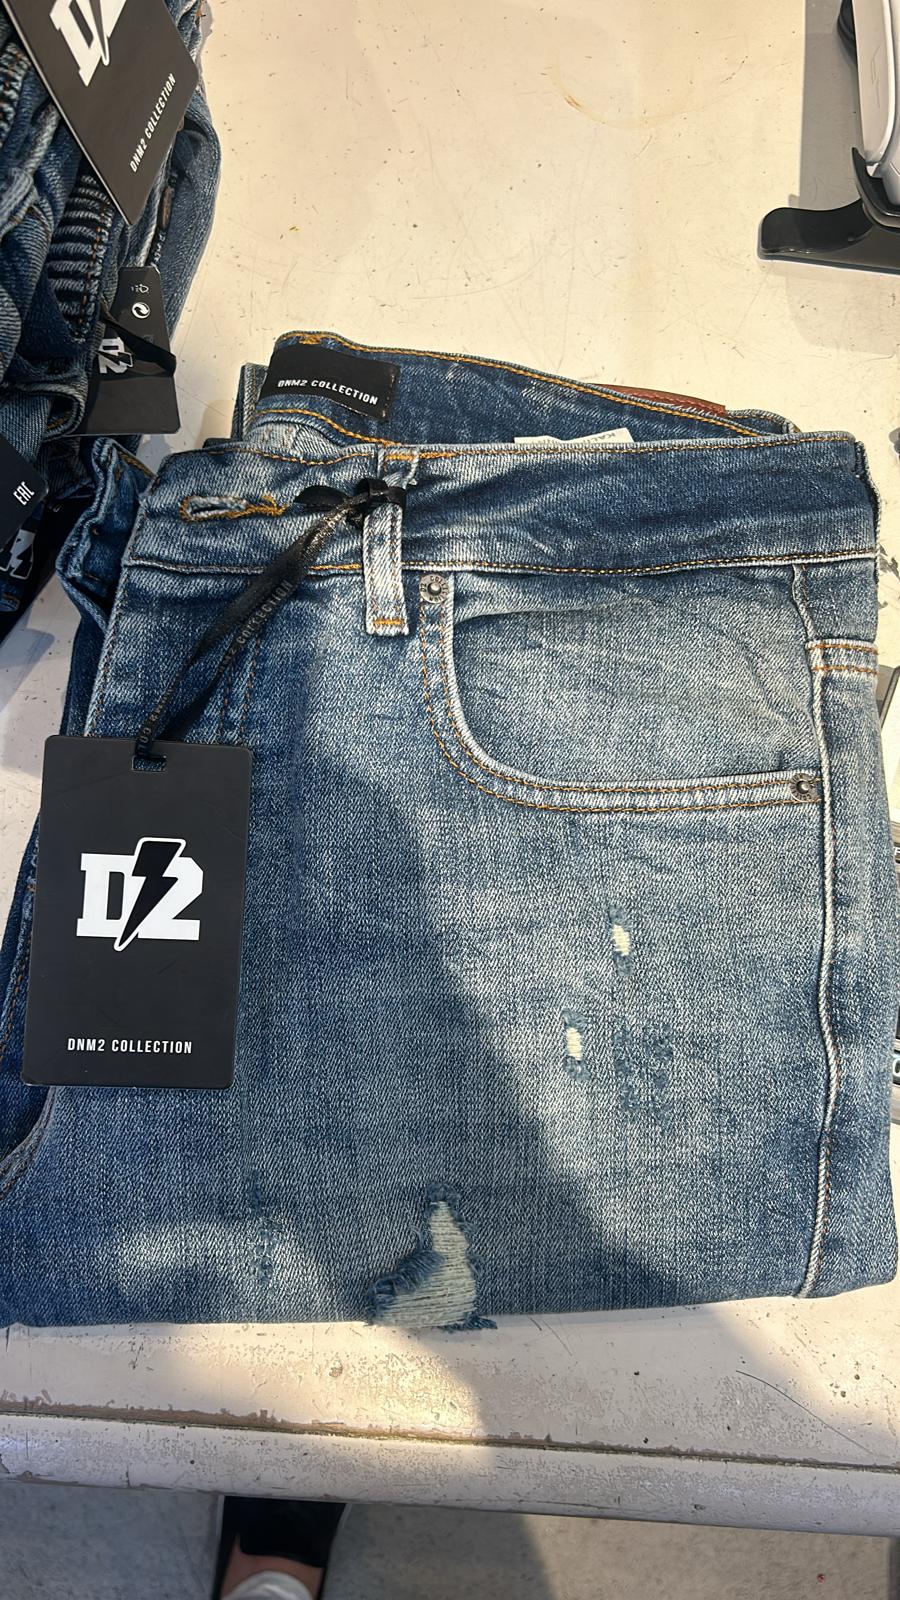 DNM2 blue jeans PANTS On Sale 30% Off Vercini